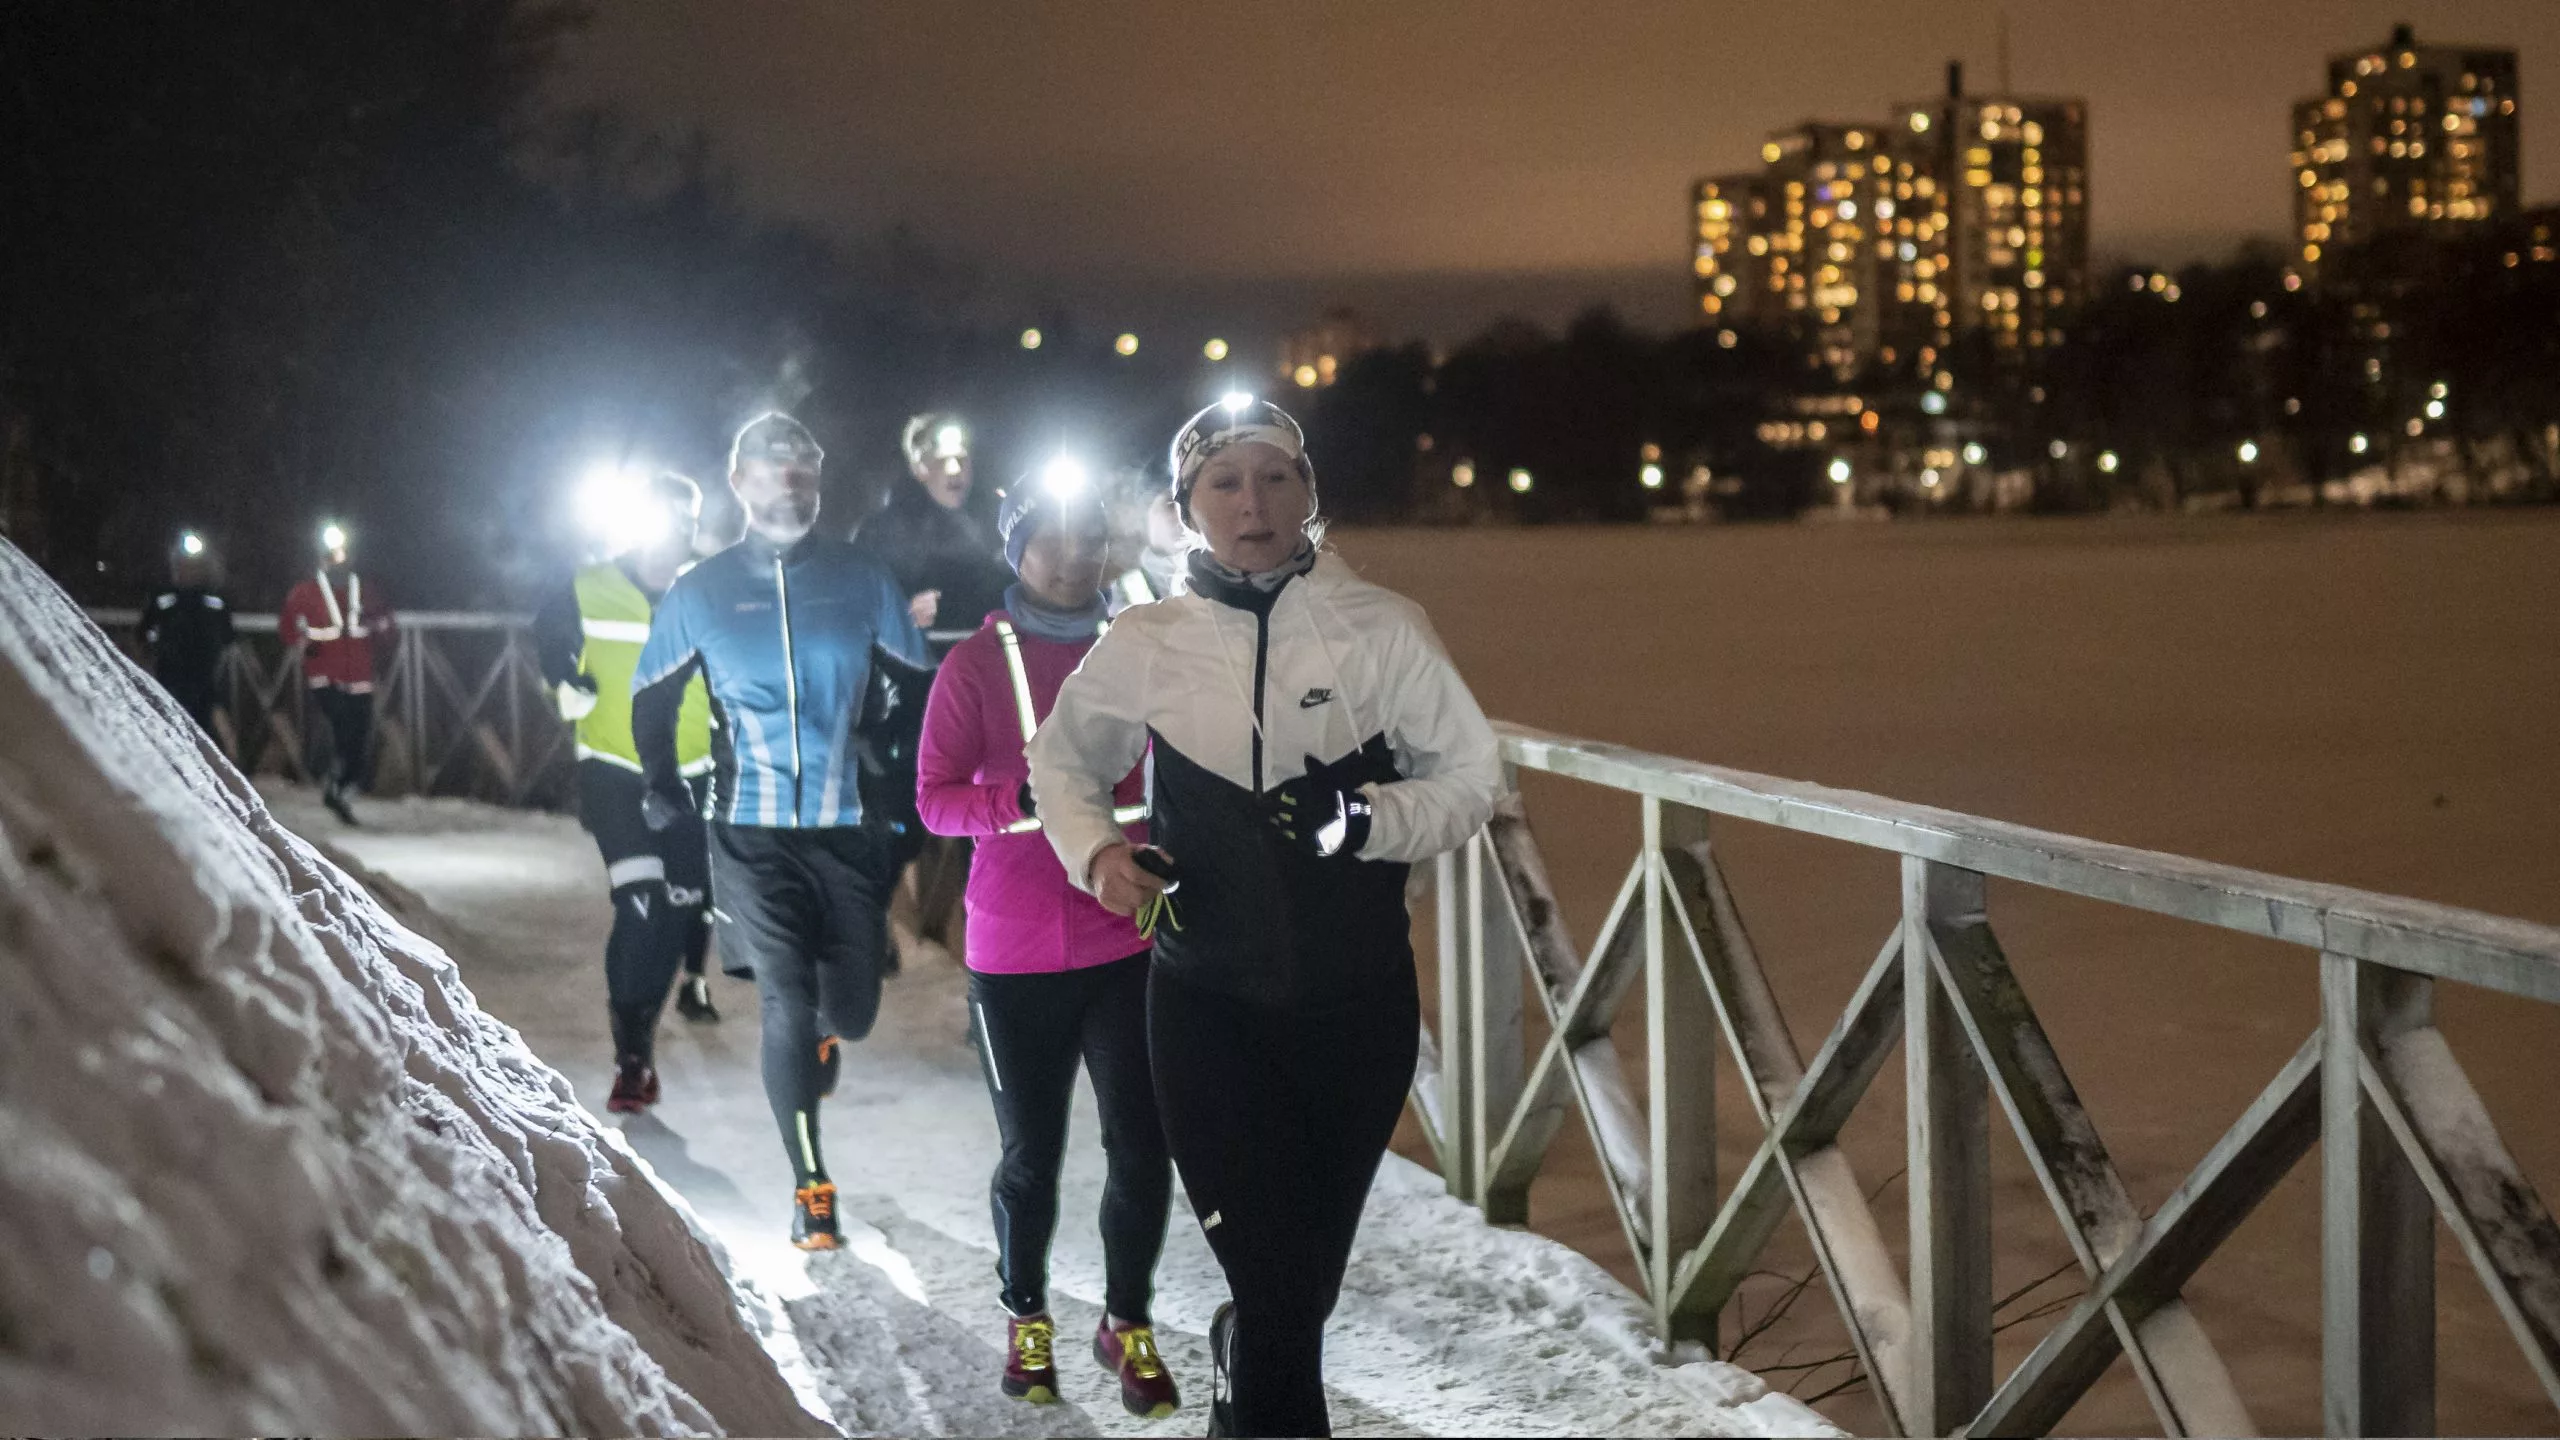 löpare springer på vintern i mörkret